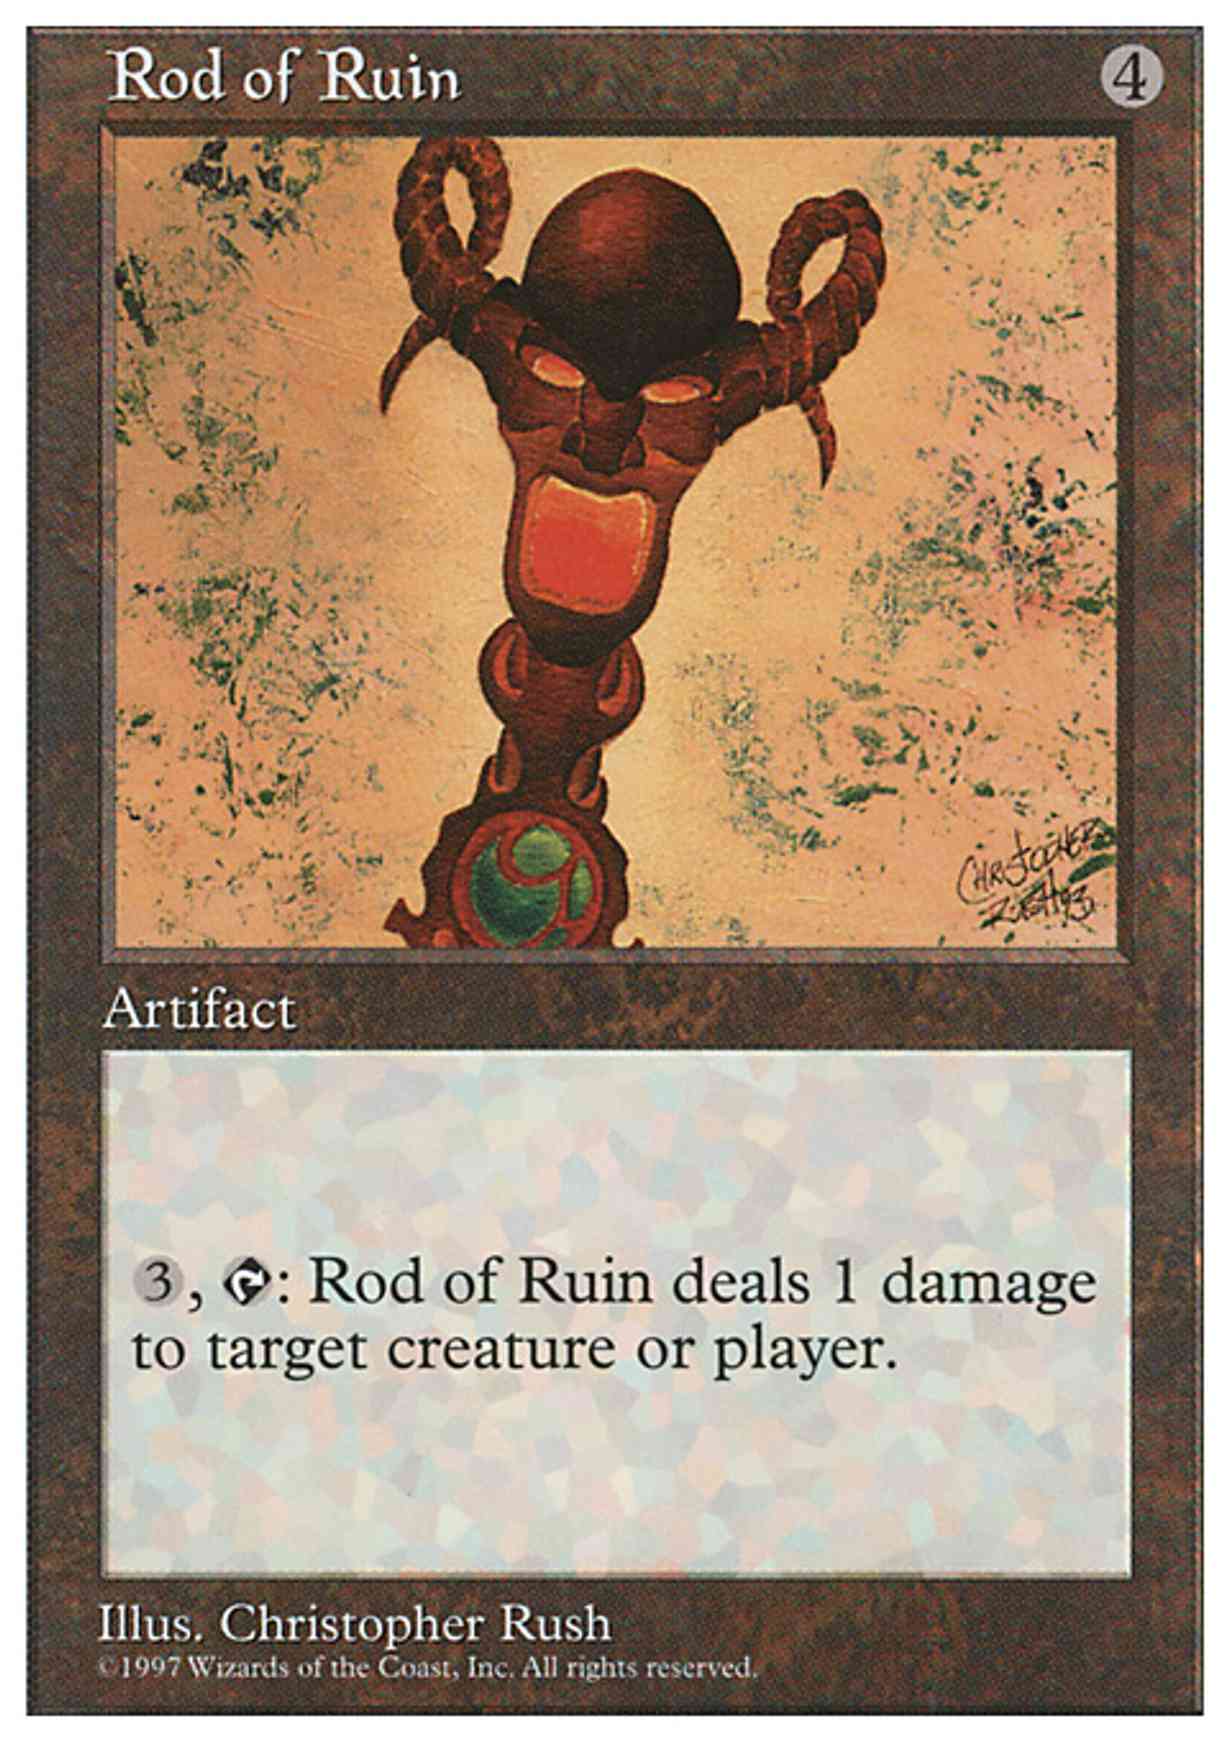 Rod of Ruin magic card front